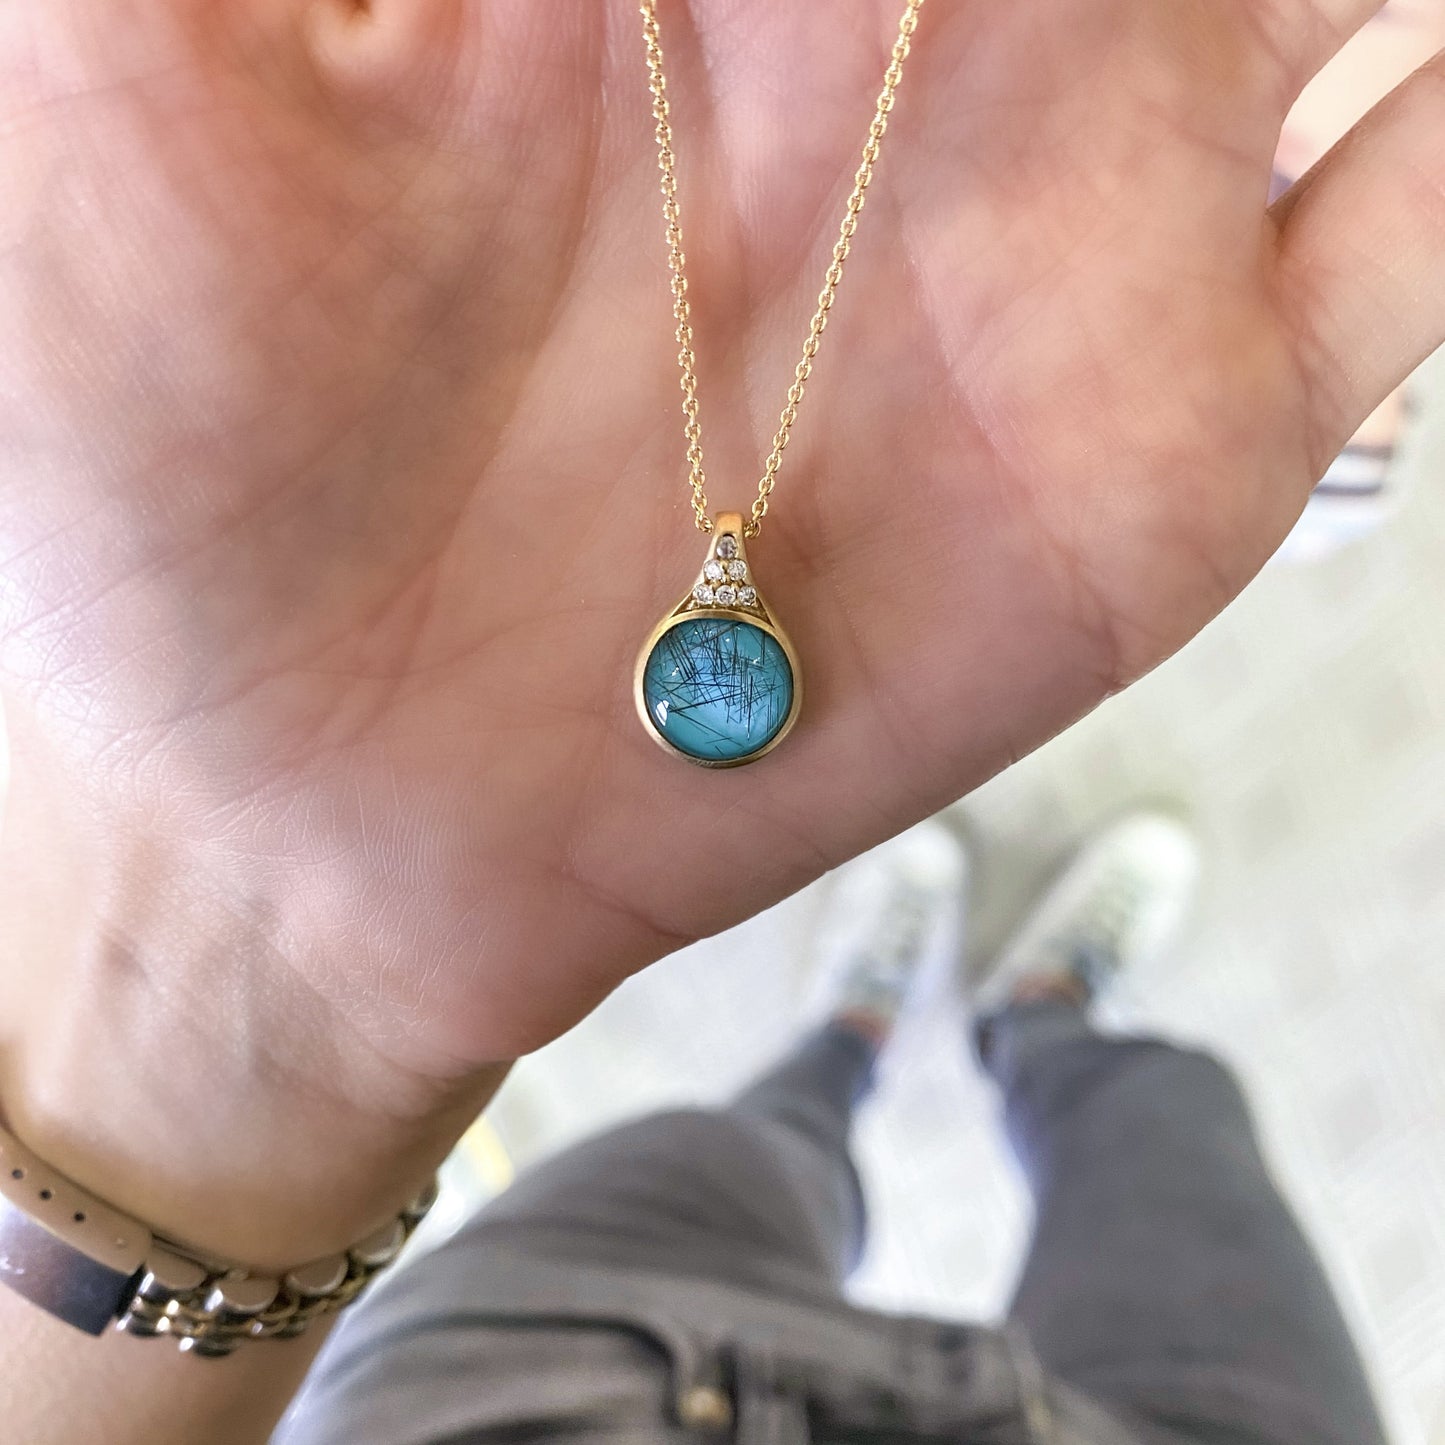 Turquoise Diamond Drop Necklace